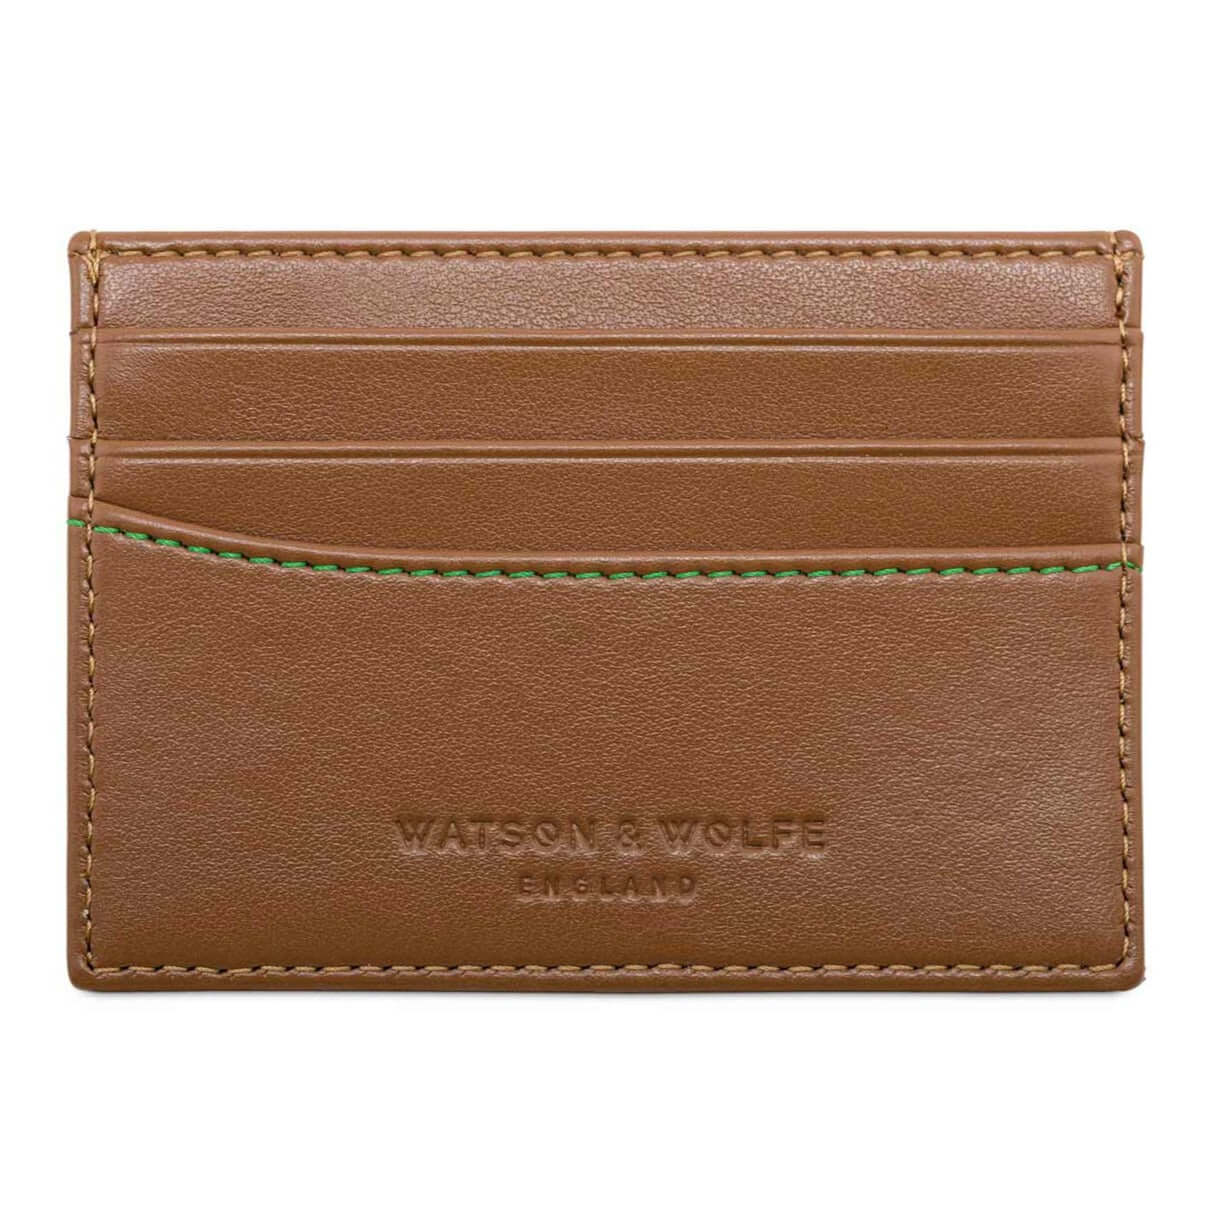 1.0 Slim Card holder | Toffee | men's wallet | Watson & Wolfe | ALLTRUEIST